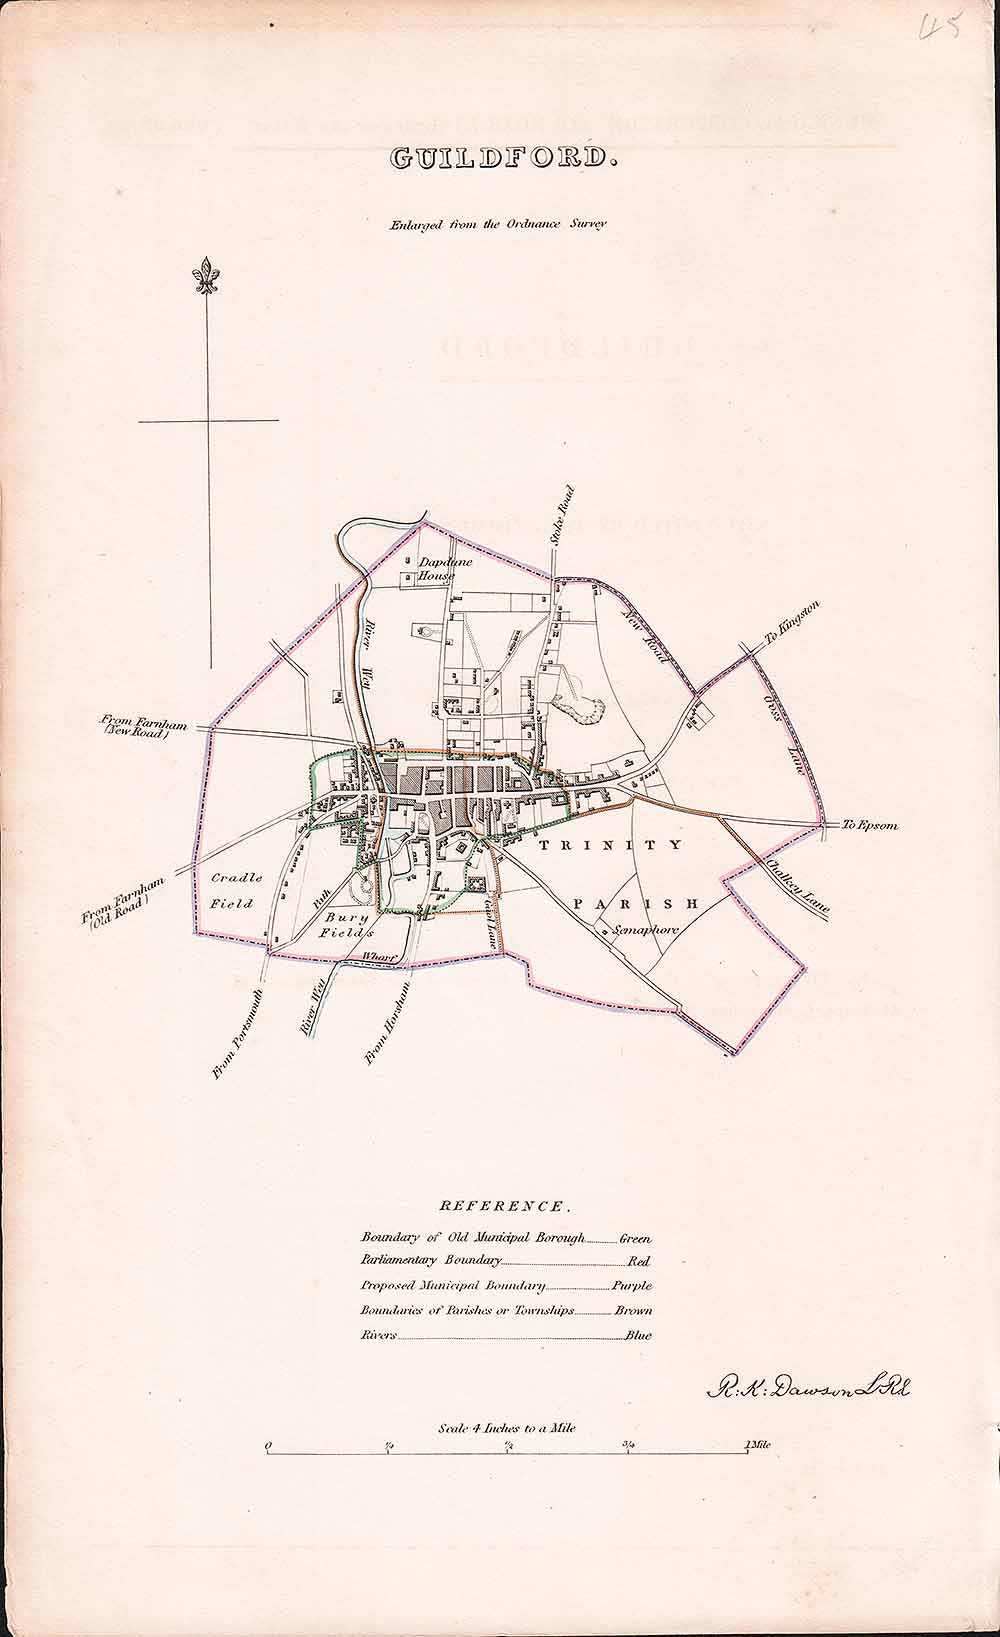 Guildford Town Plan - RK Dawson 